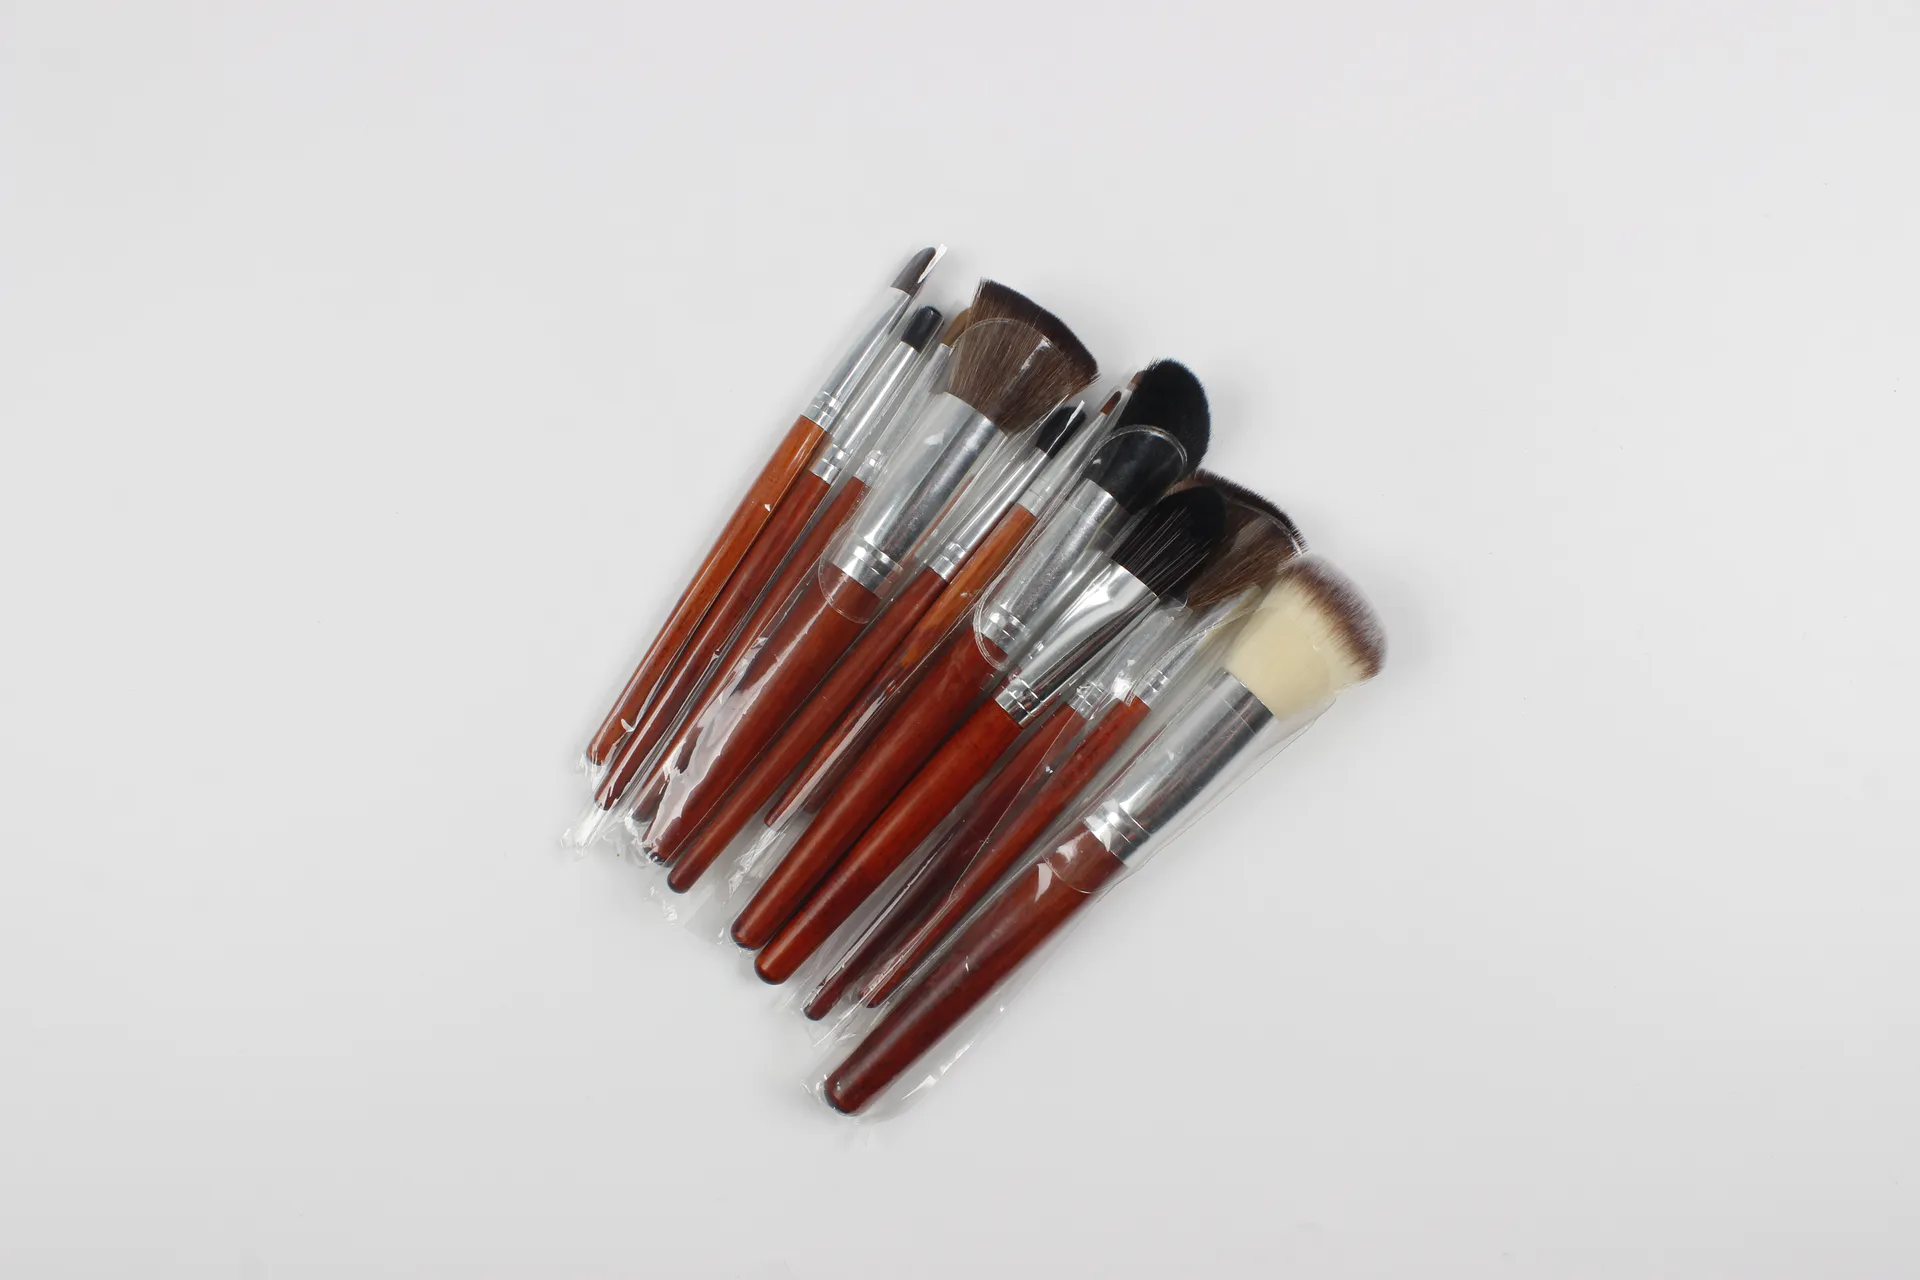 brush make set up Black Luxury Makeup Brush Set Kit Wholesale Wood Handle Private Label foundation Cosmetic makeup brushes